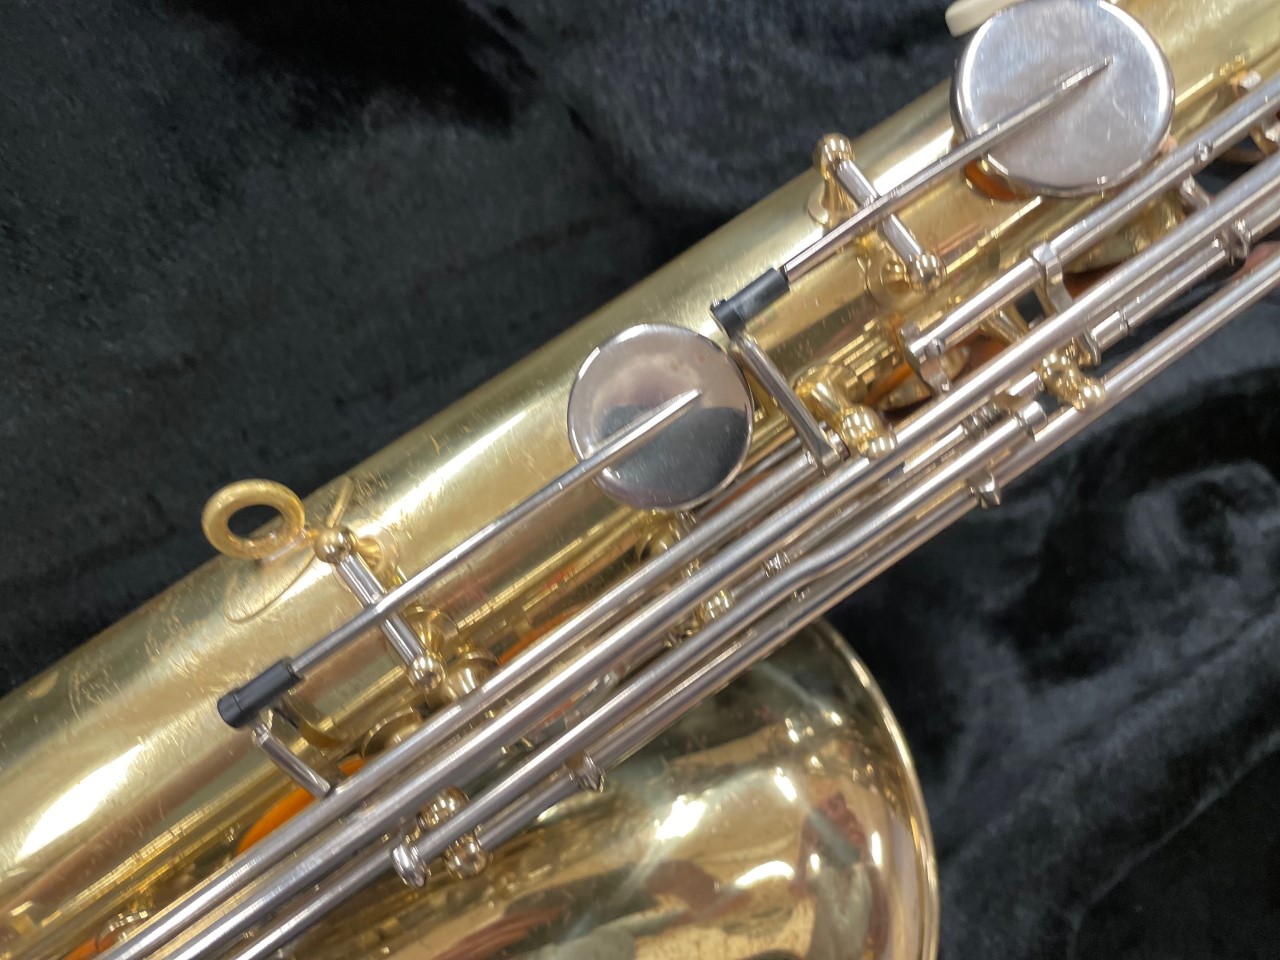 Pre-Owned Yamaha YTS-21 (Purple Label) tenor saxophone